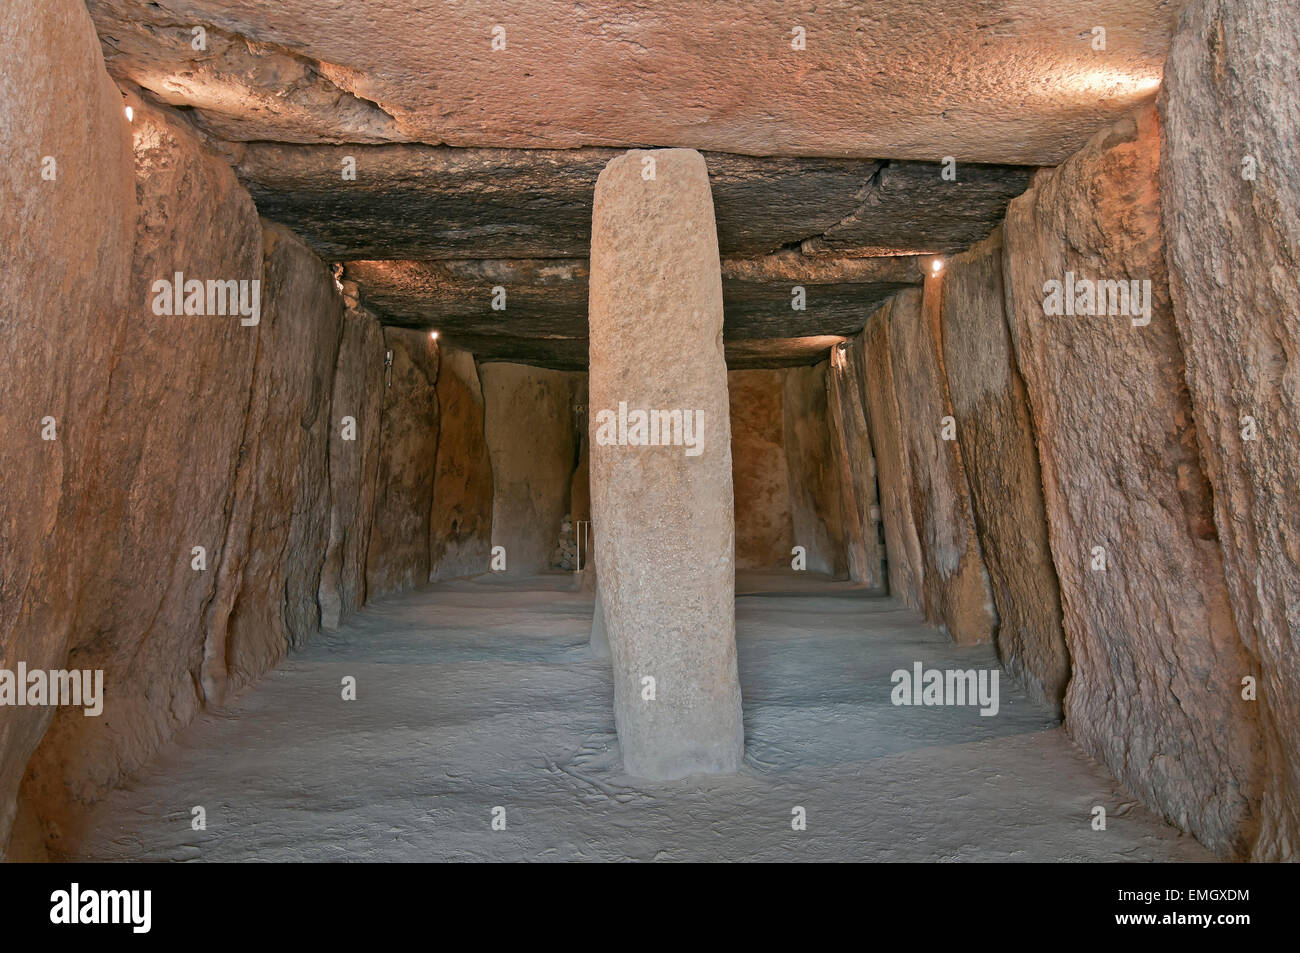 Dolmen - Cueva de Menga, Antequera, Malaga province, Region of Andalusia, Spain, Europe Stock Photo